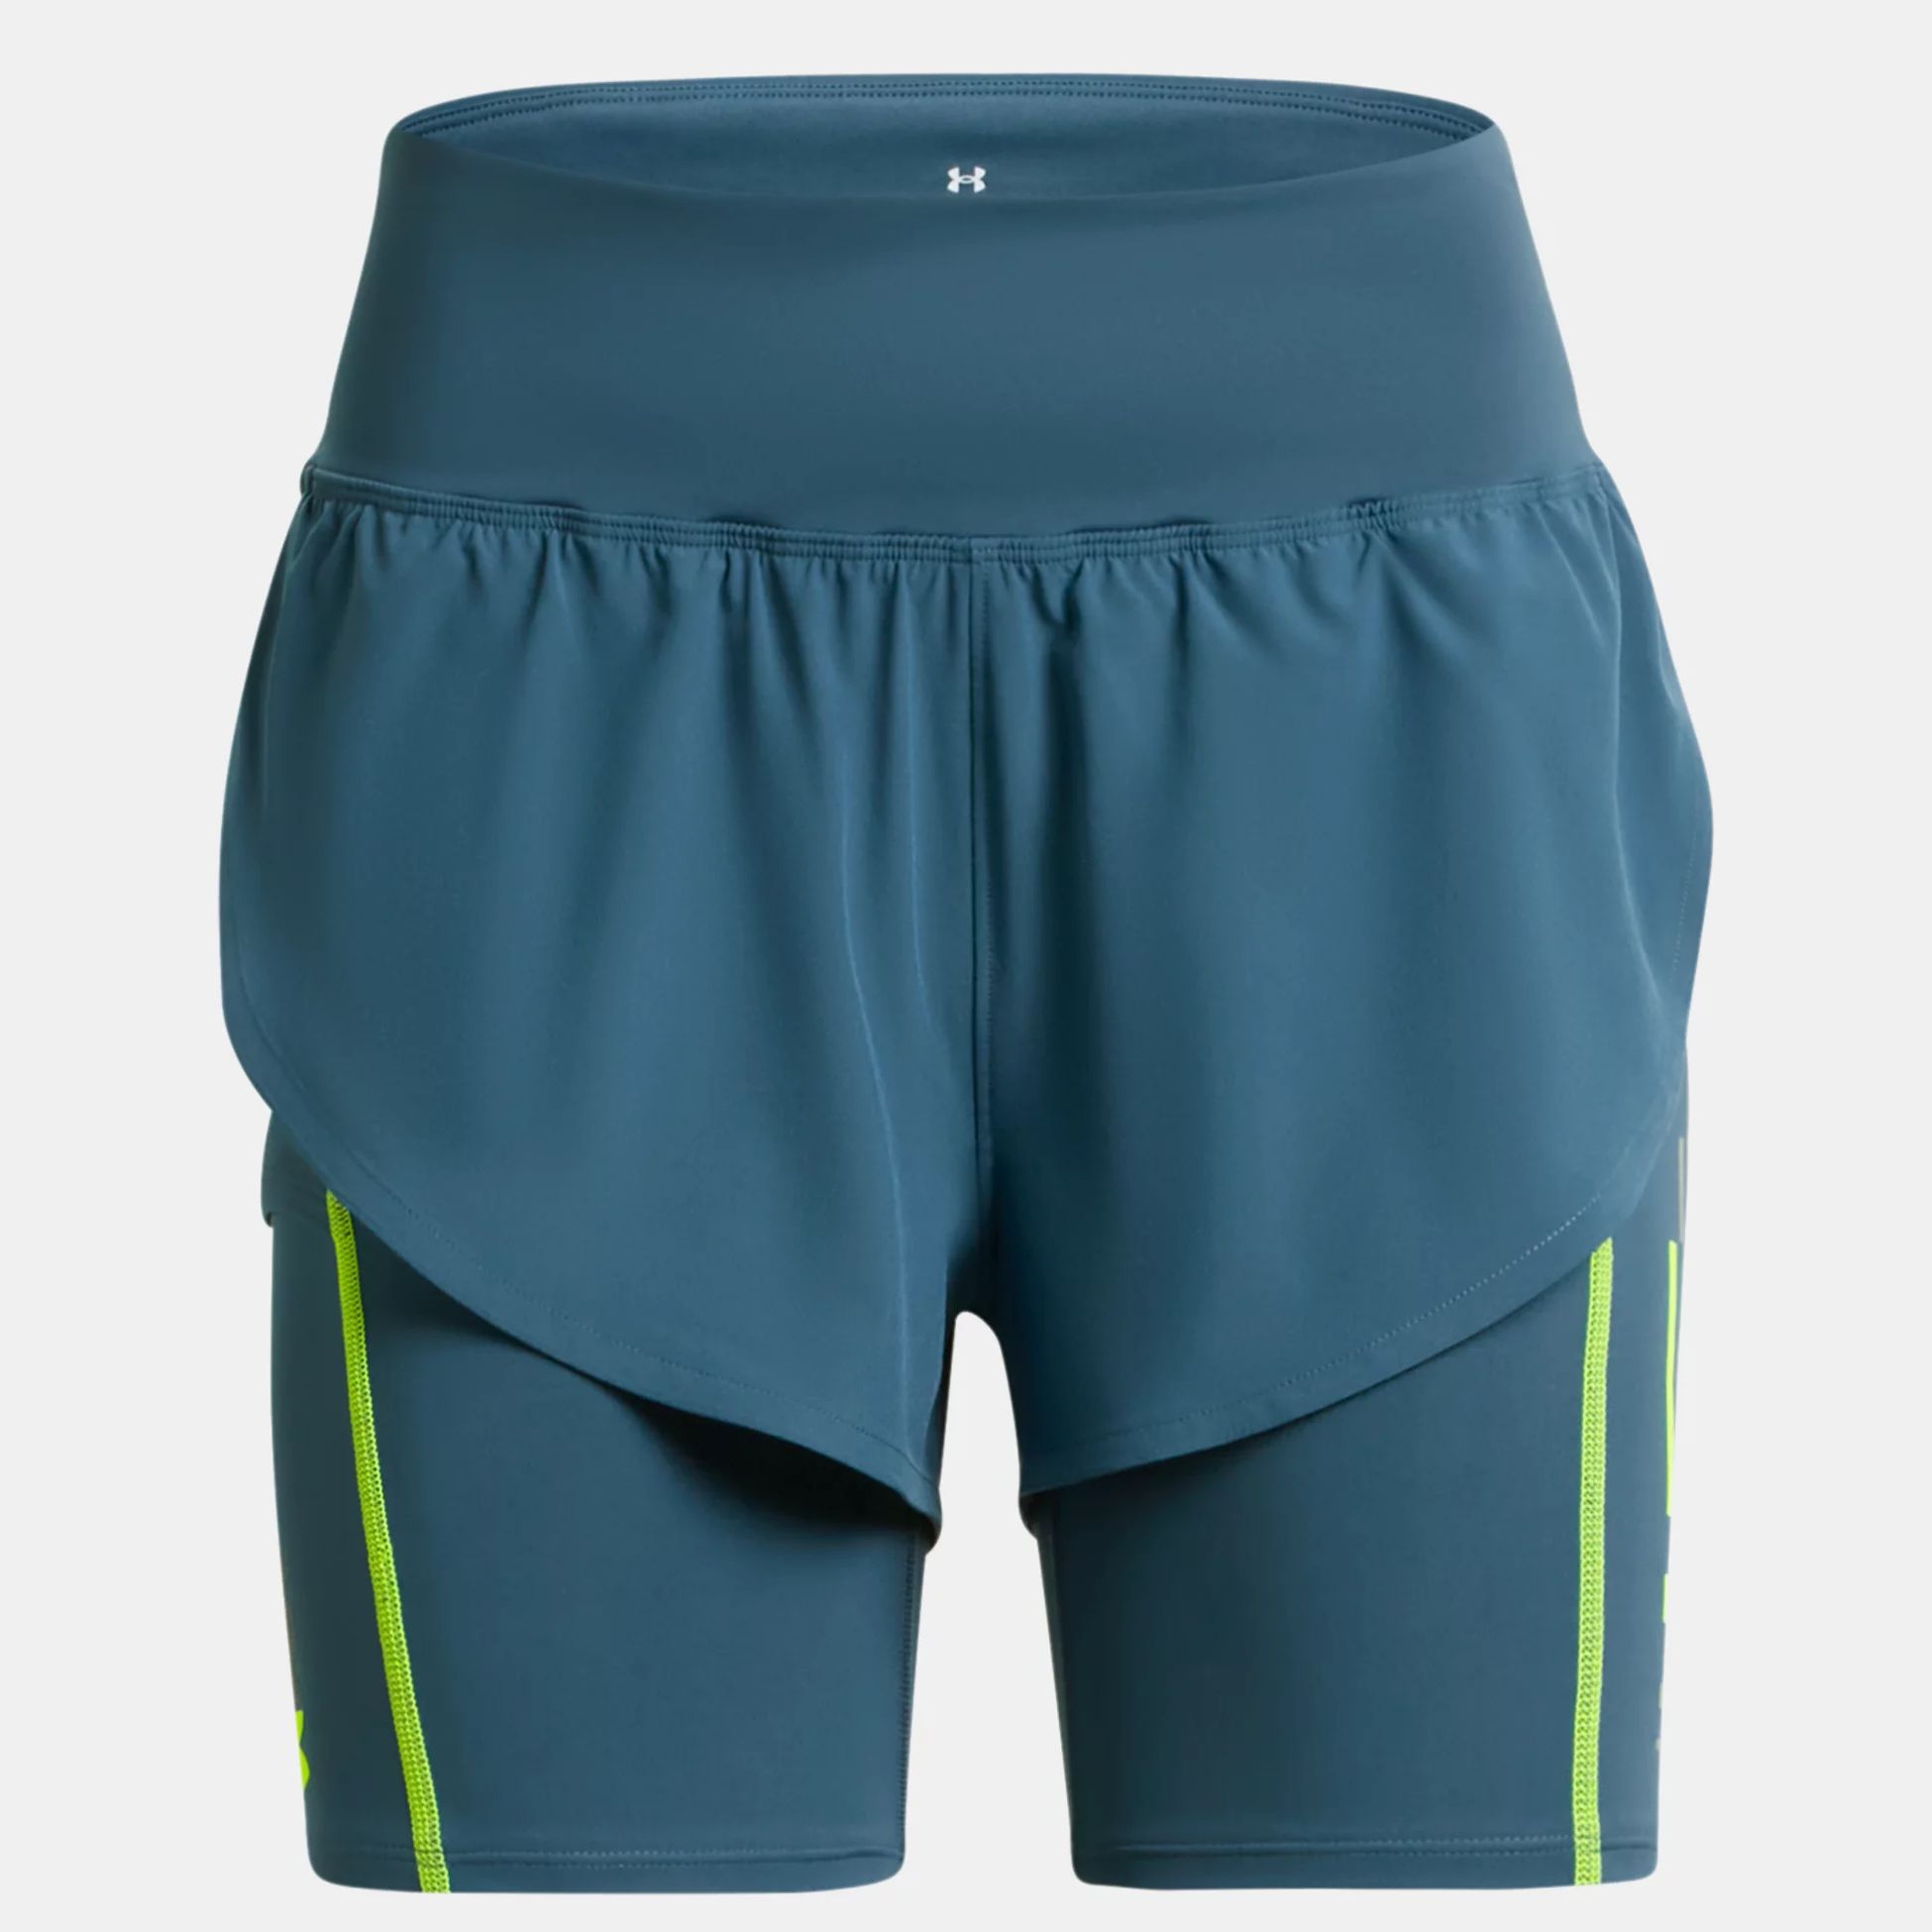 Shorts -  under armour Run Anywhere Shorts